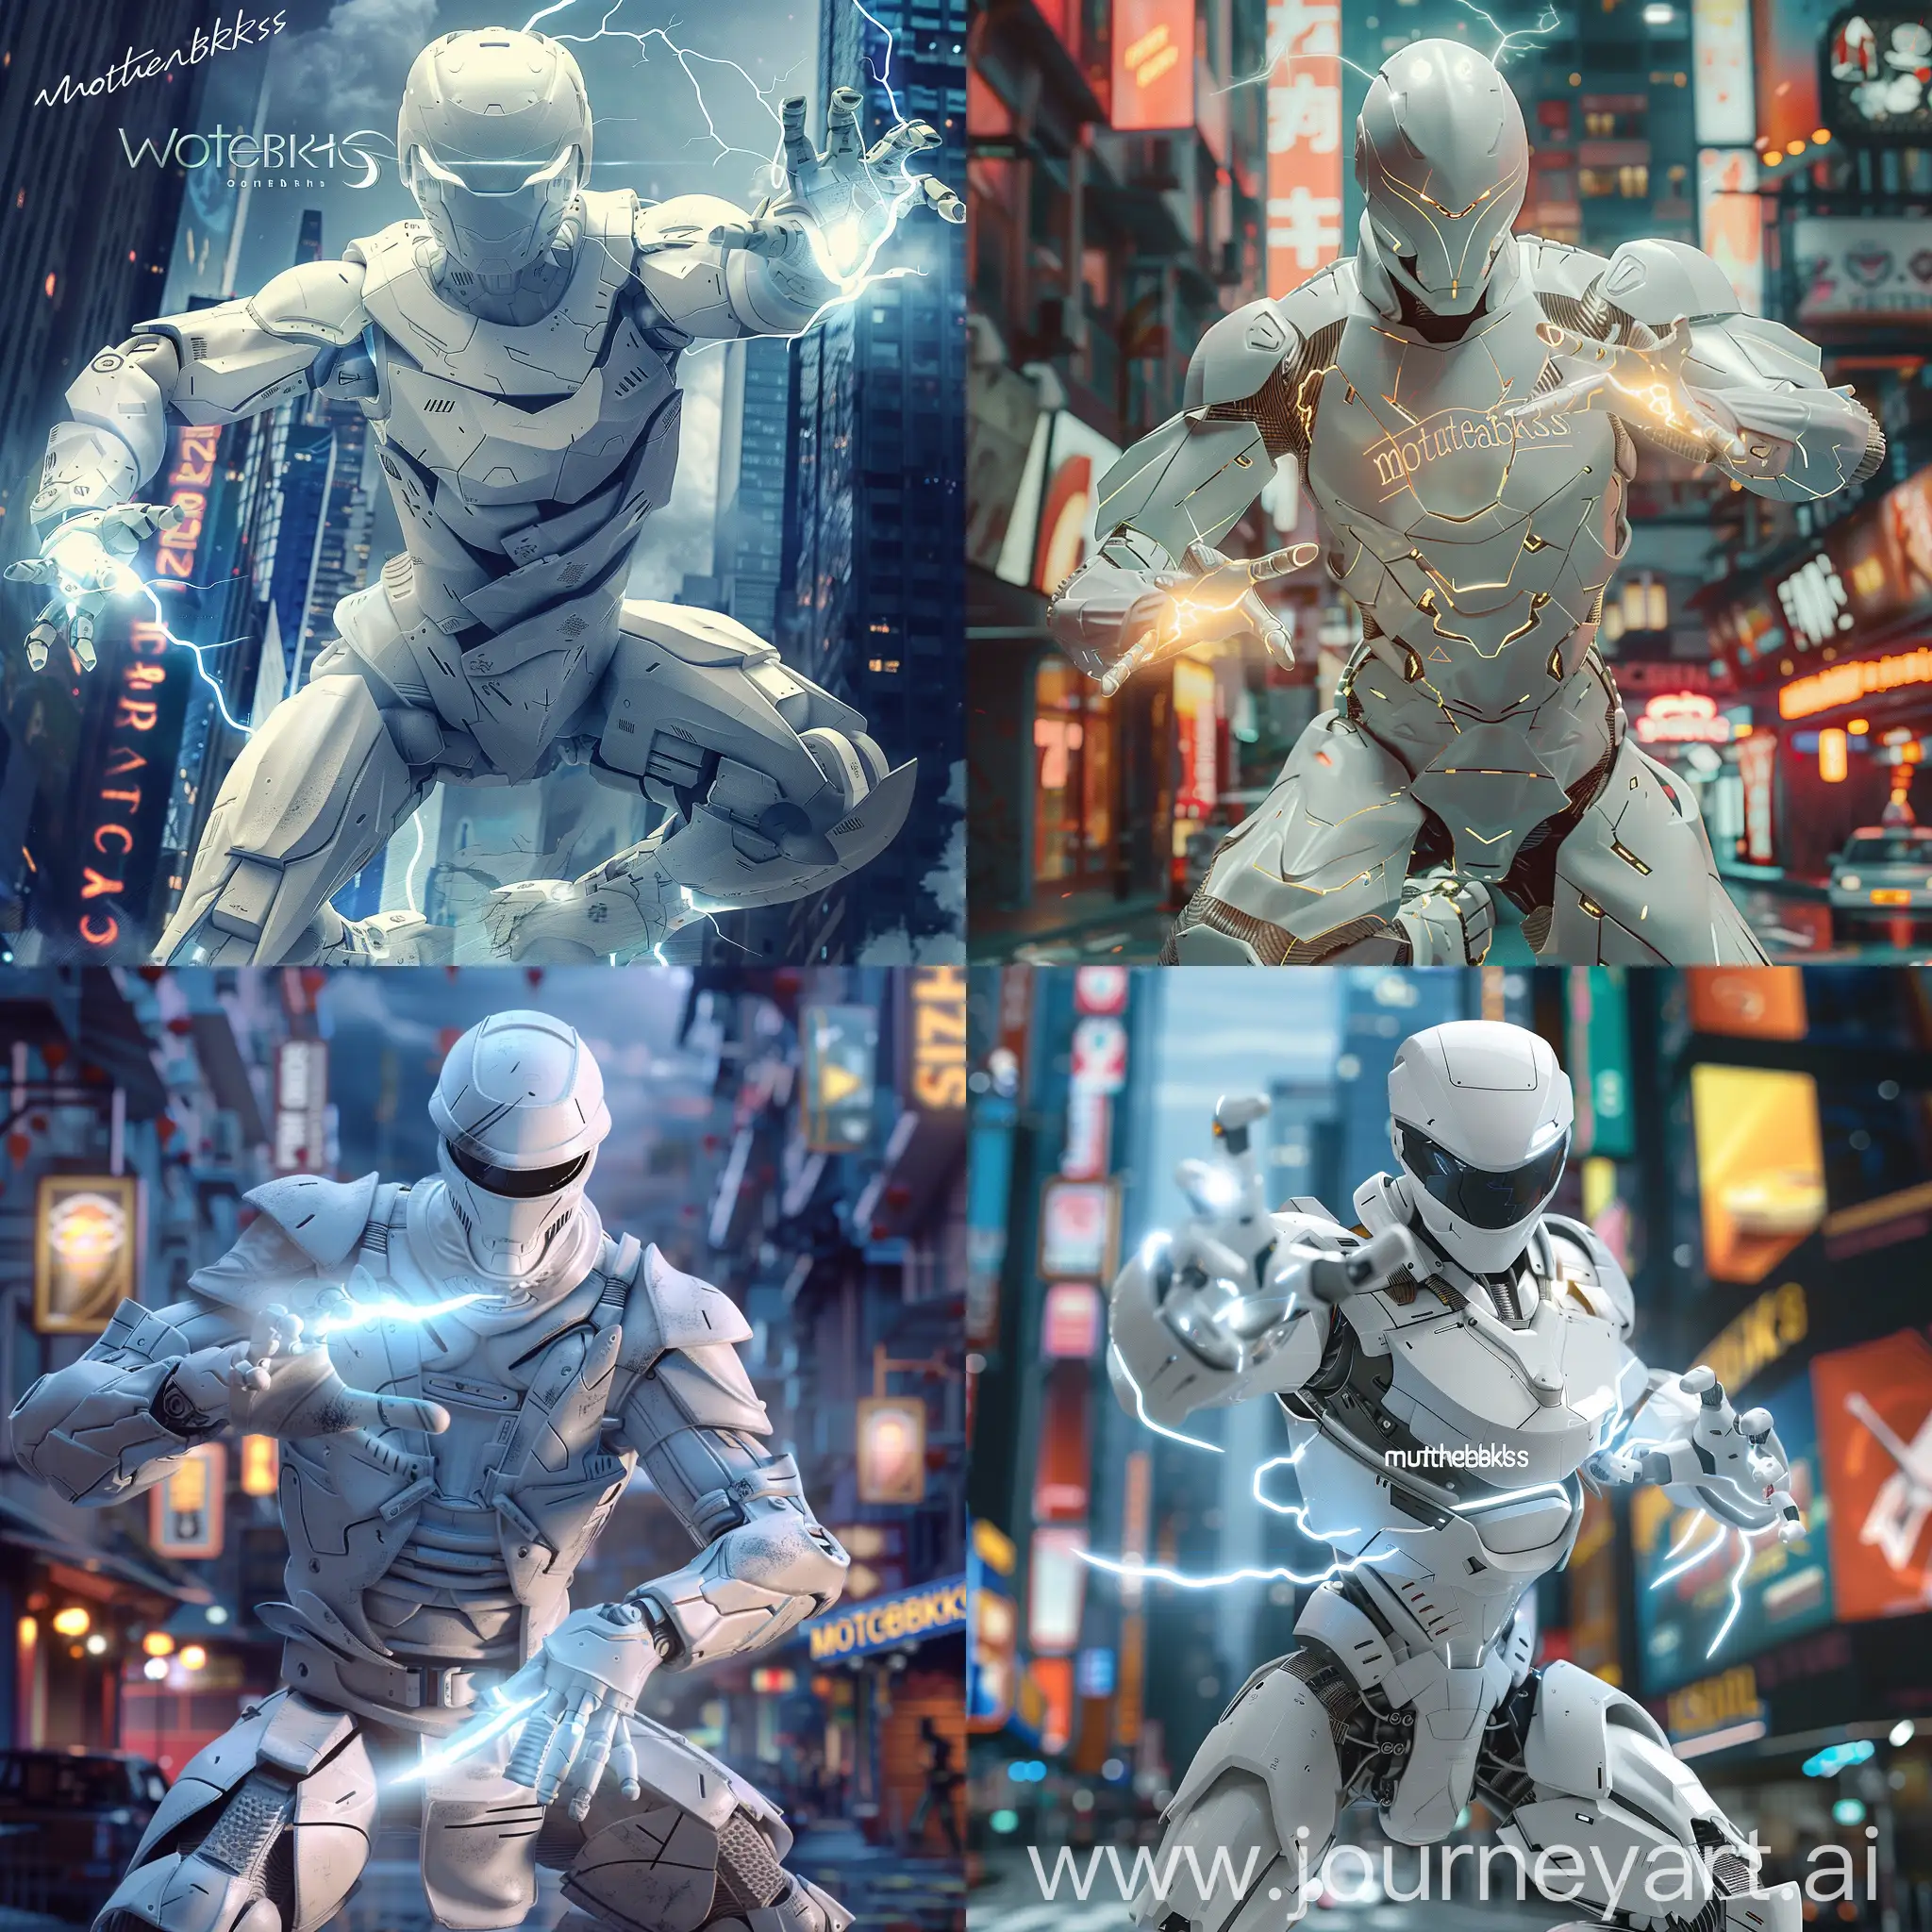 Futuristic-White-Ninja-Robot-with-Light-Energy-Hands-in-Magenta-City-Motivbreaks-Logo